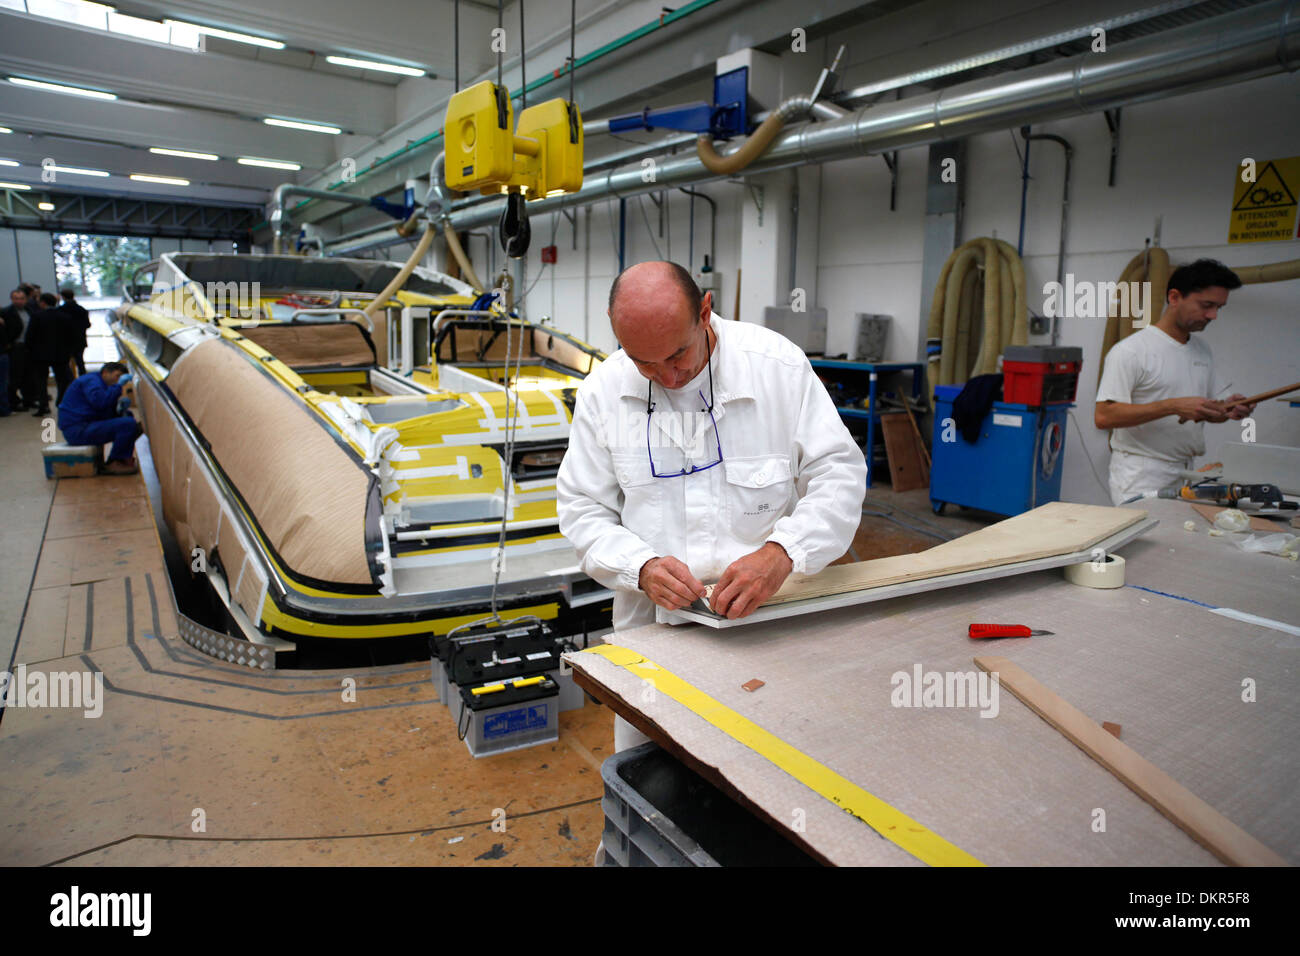 Rivarama Superyacht im Bau an der Riva-Fabrik in Sarnico, Italien. Stockfoto